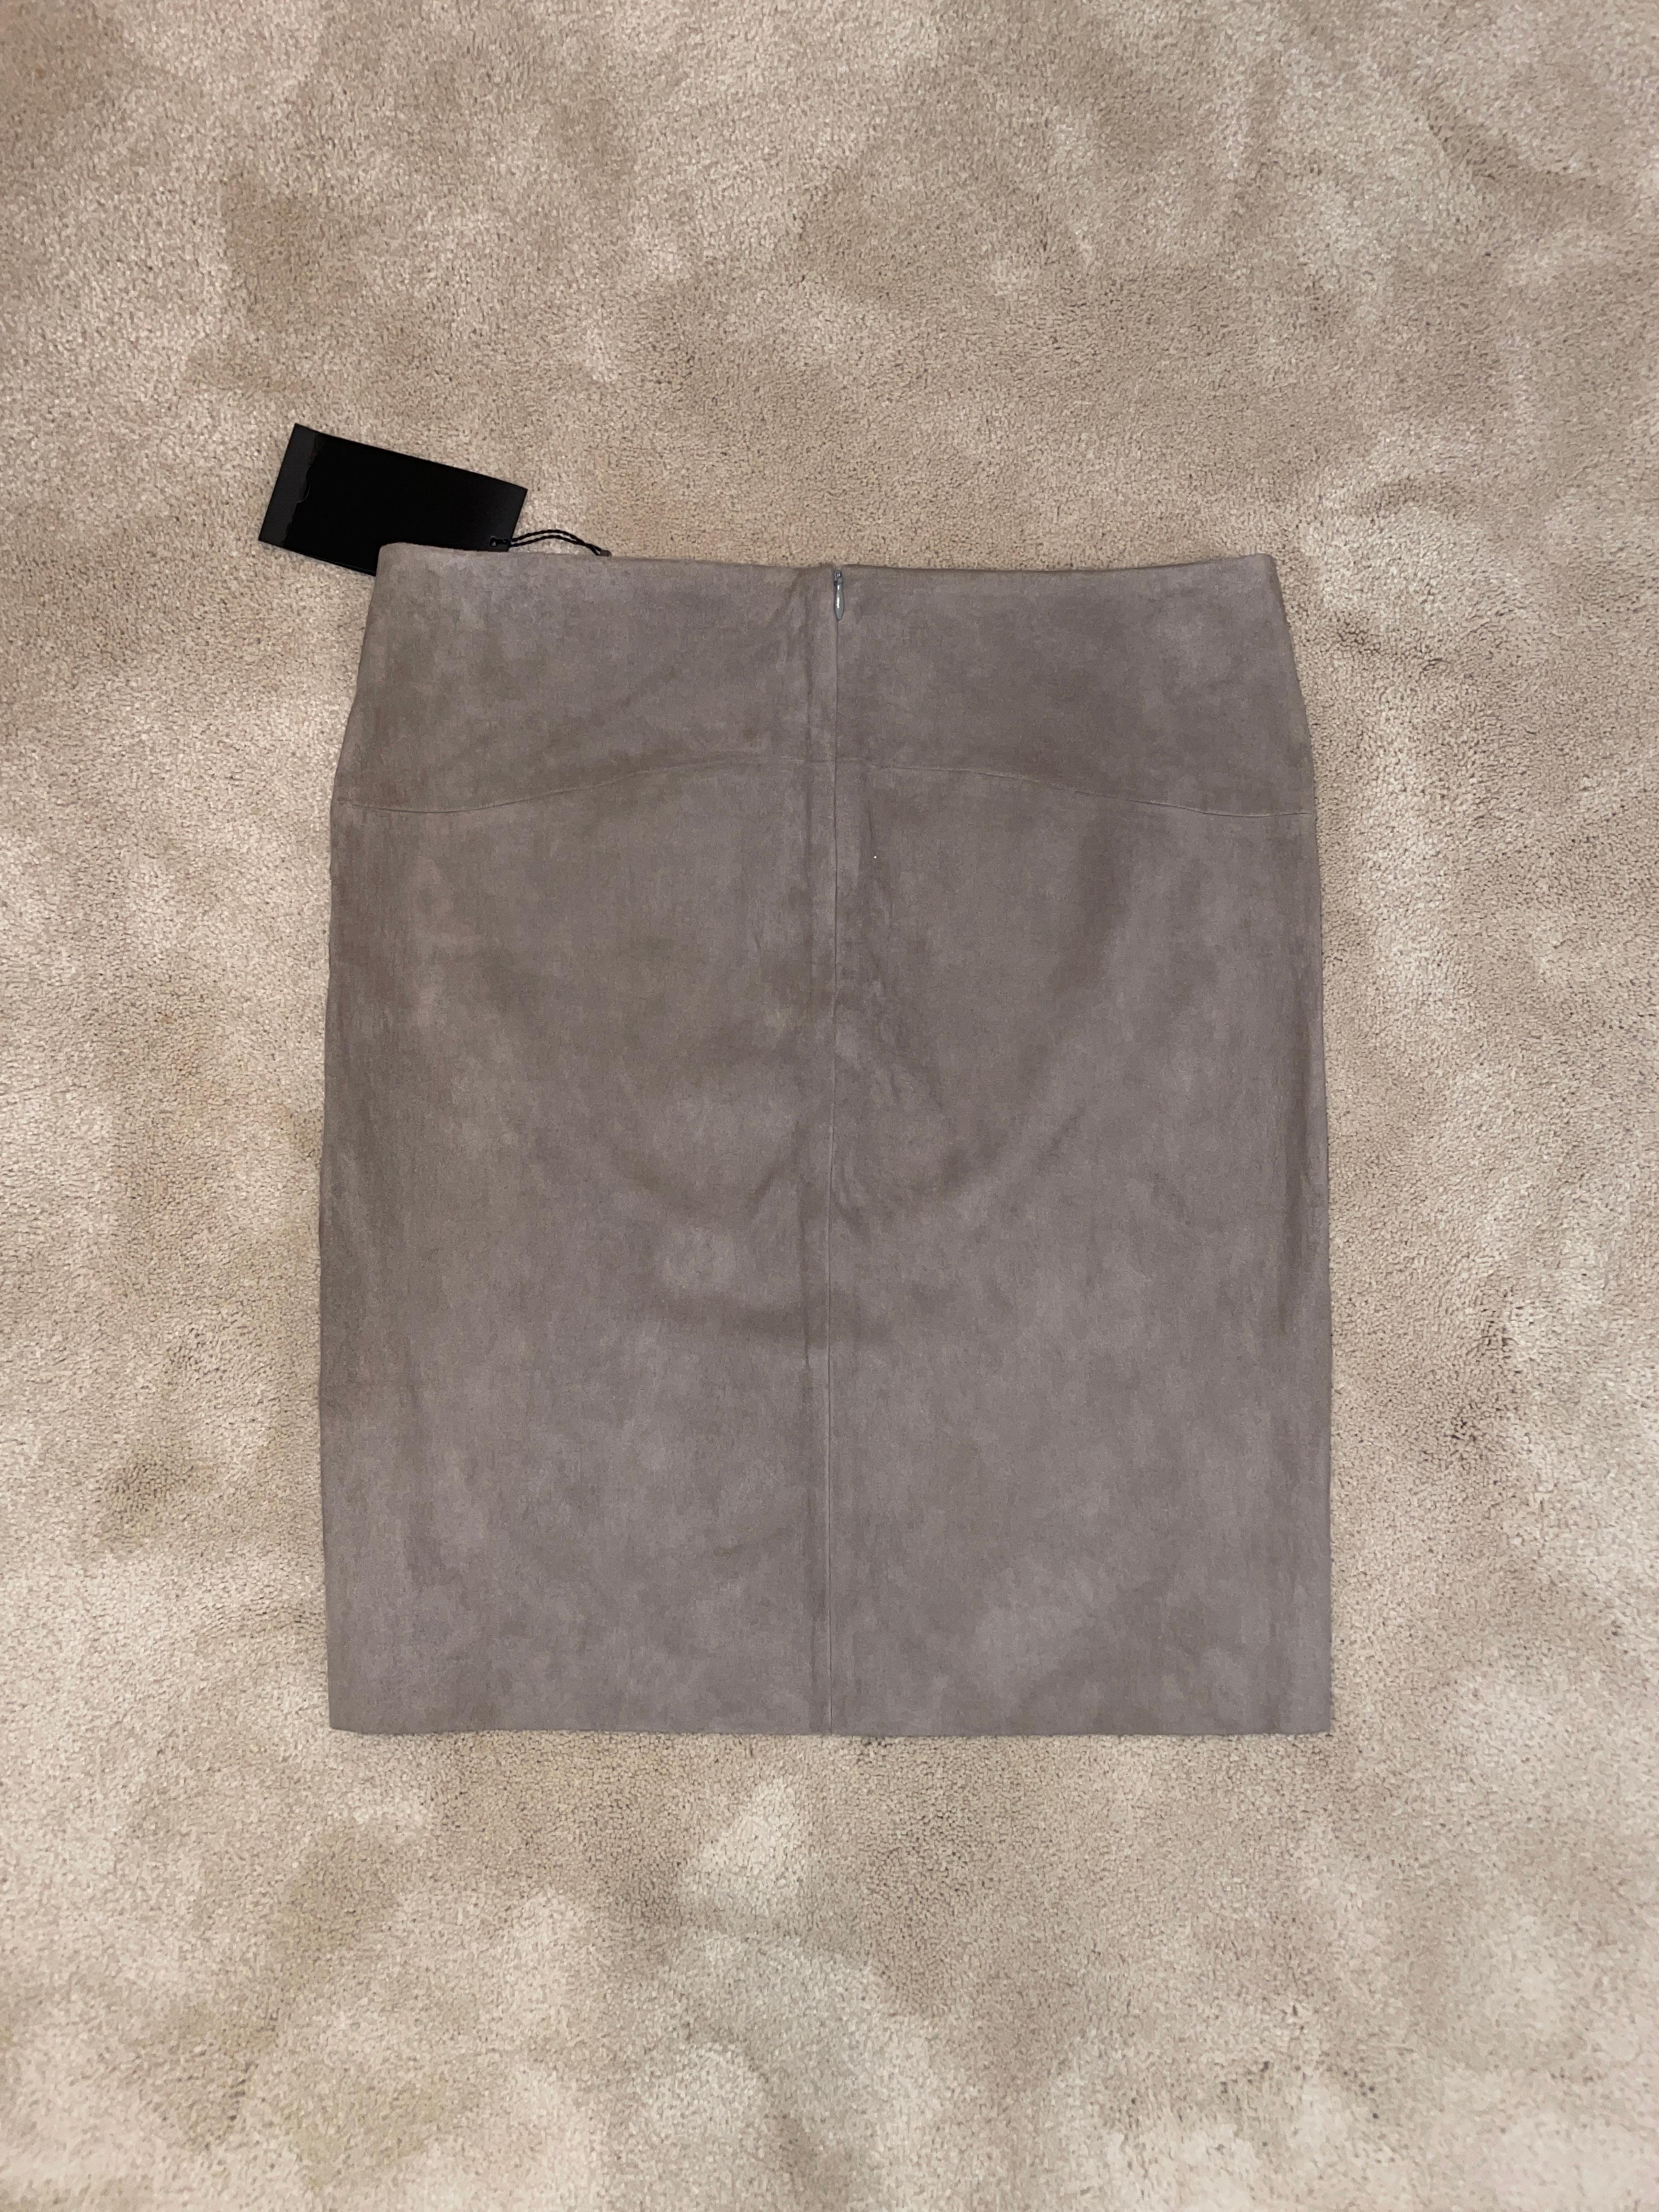 Beige JITROIS stretch suede khaki beige pencil skirt For Sale